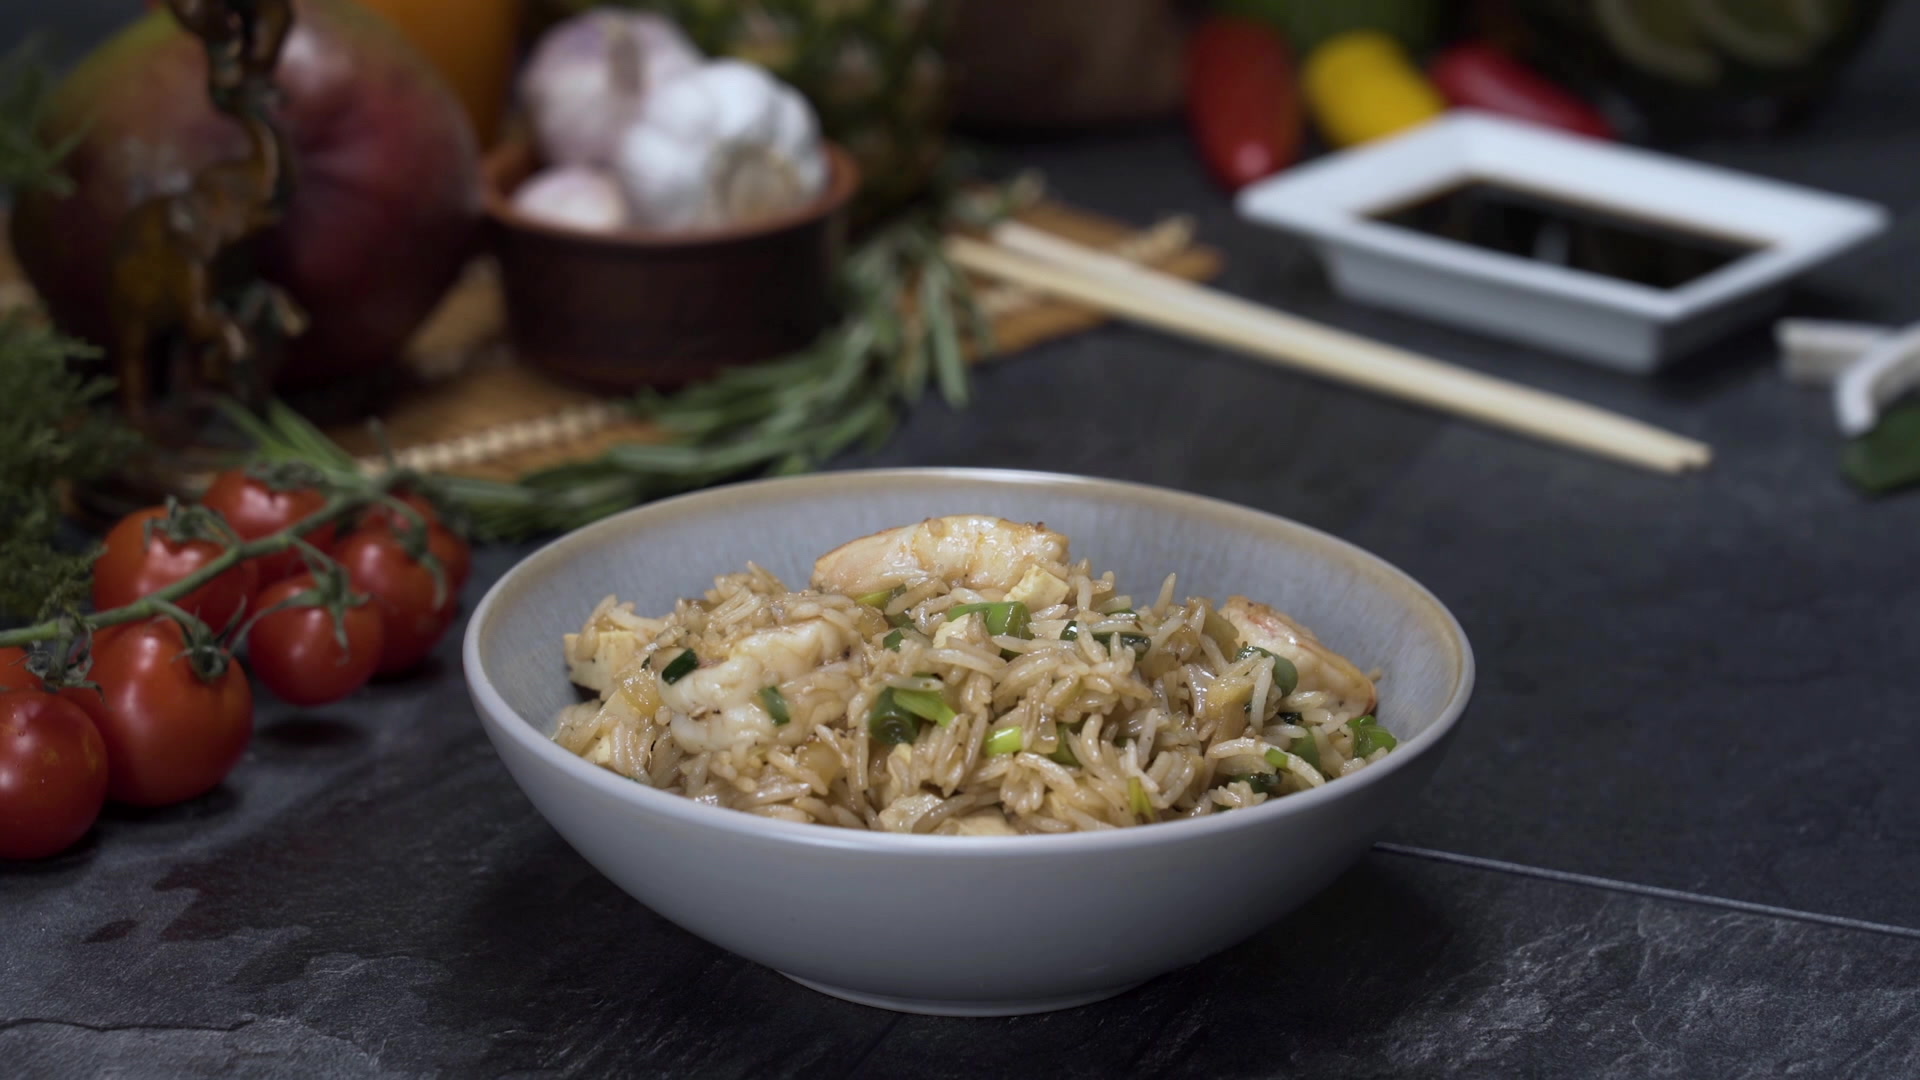 [RECIPE] Fried Rice with Shrimp and Tofu